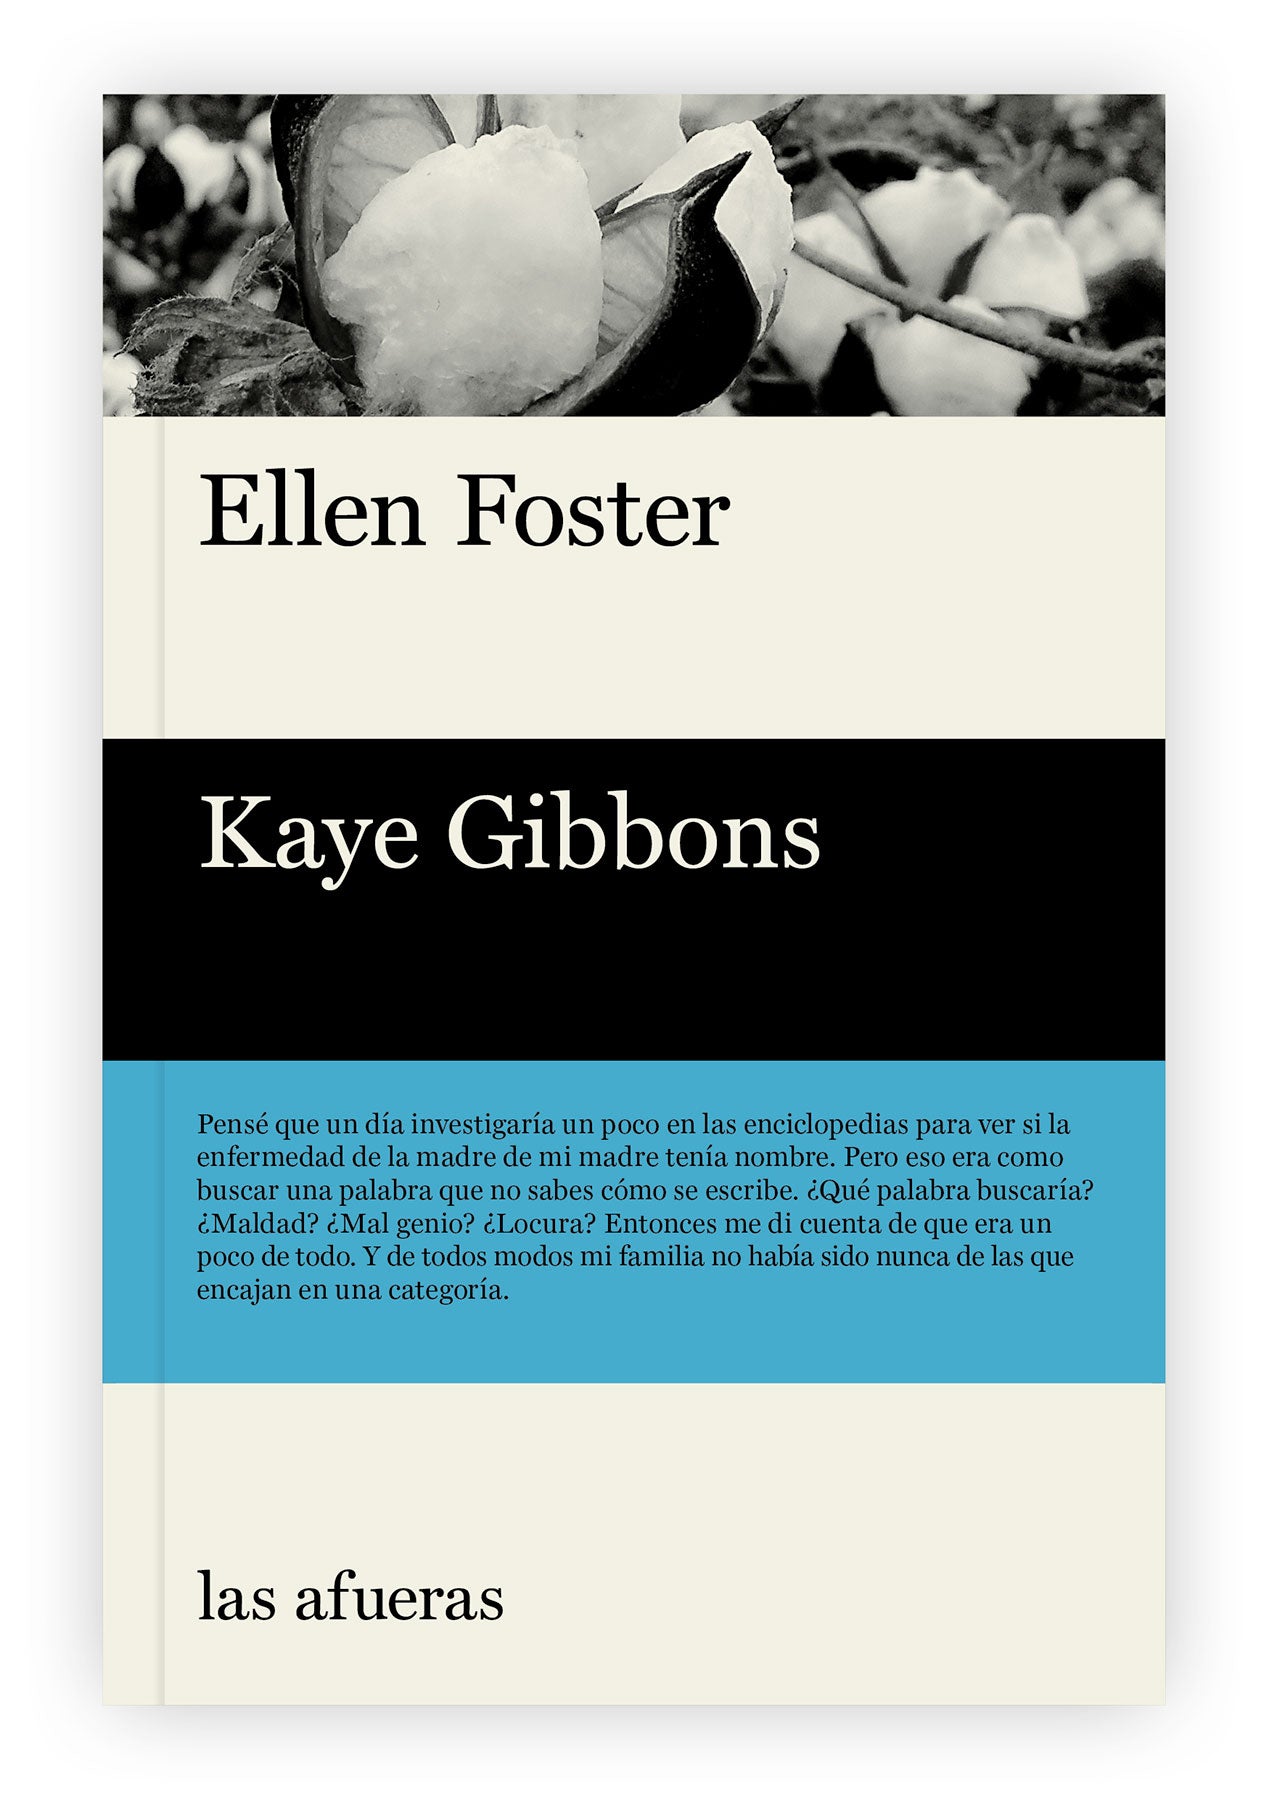 "Ellen Foster", de Kaye Gibbons